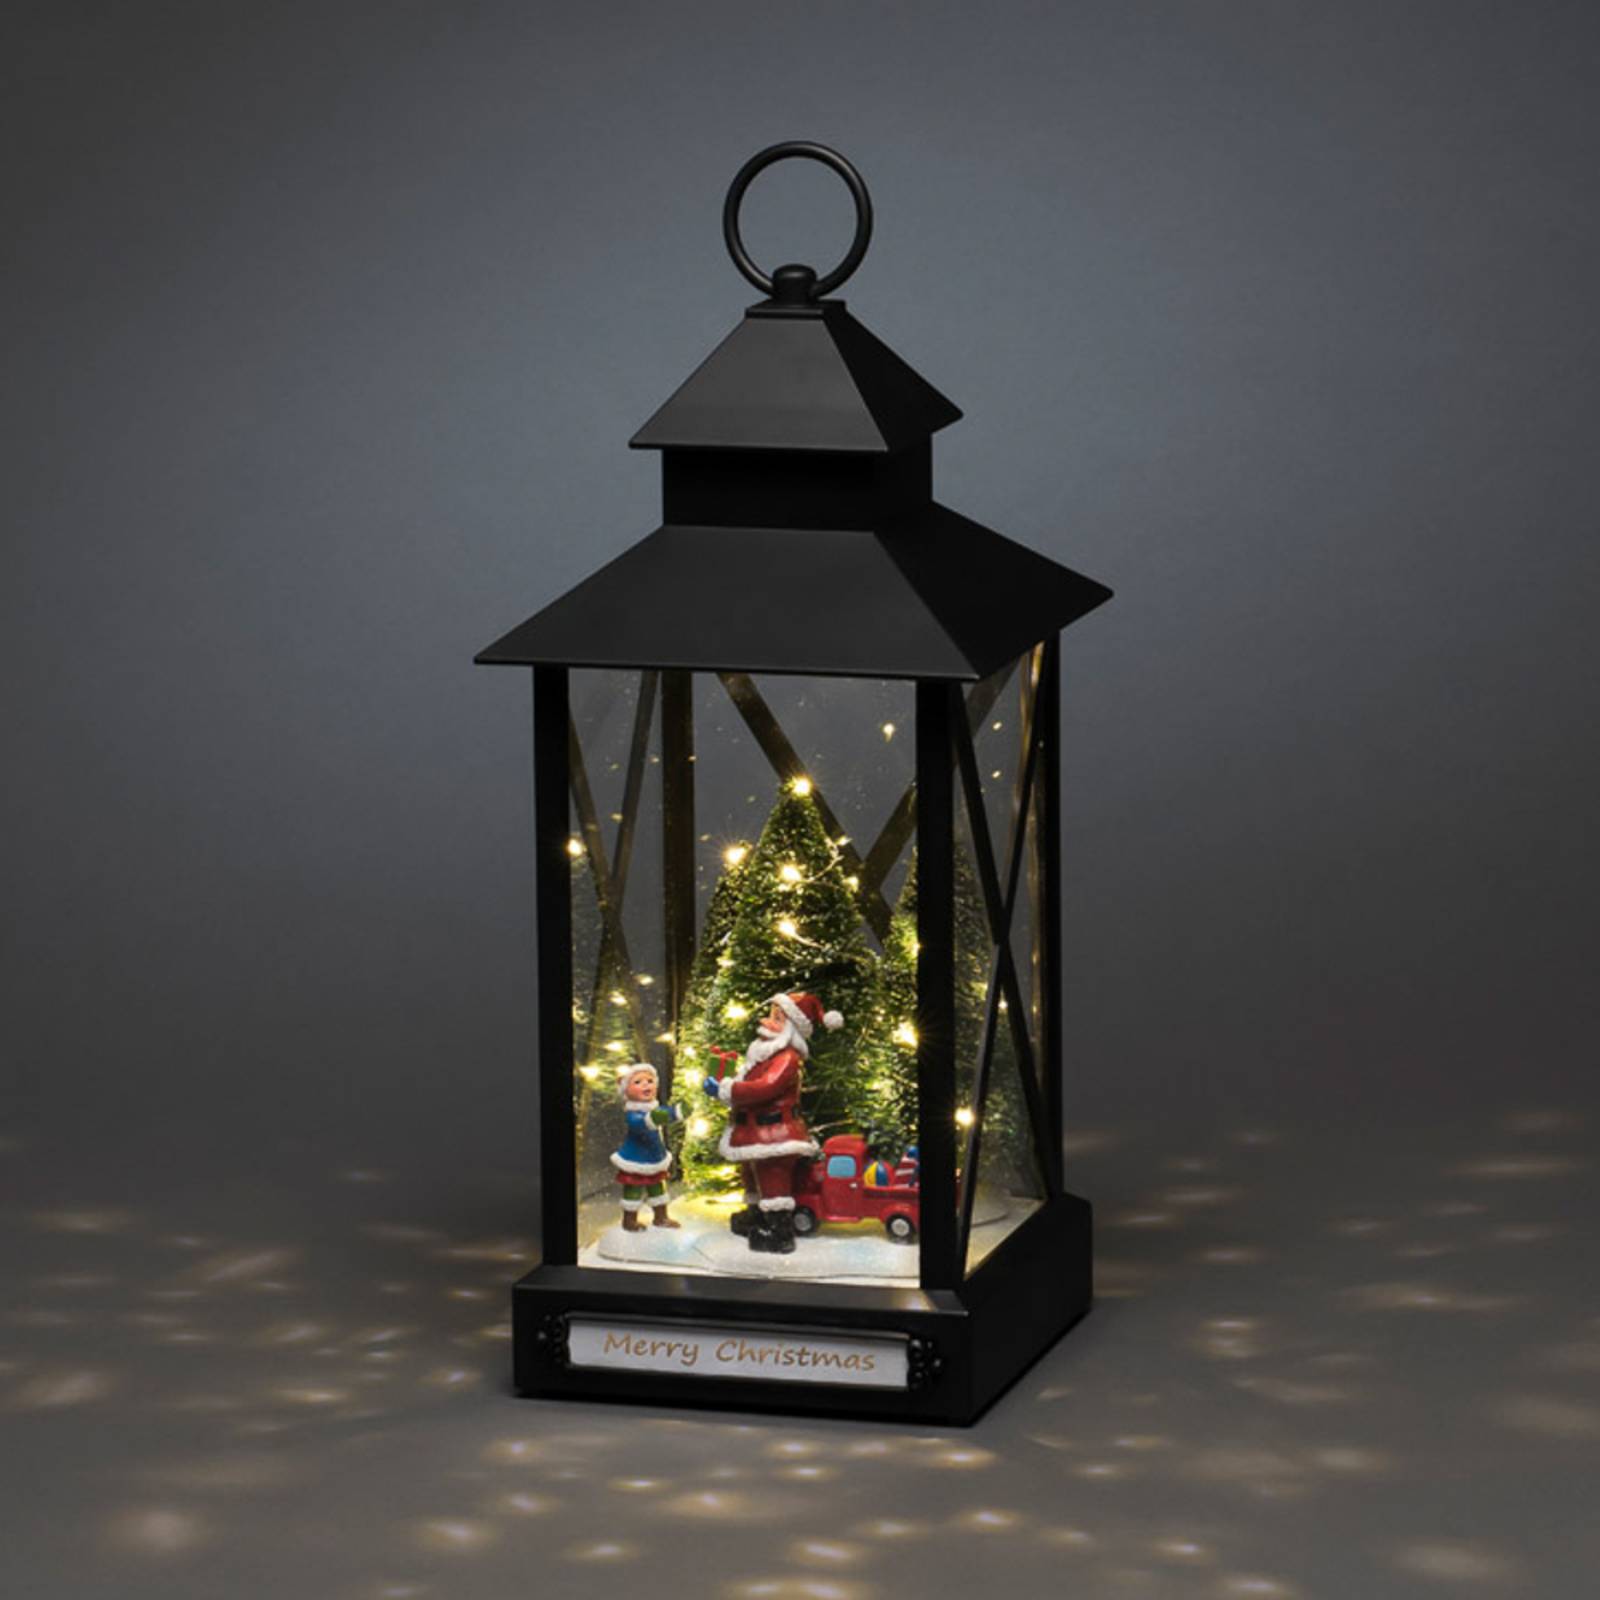 *For X-Mas*: LED-Laterne “Weihnachtsmann”, Kunststoff